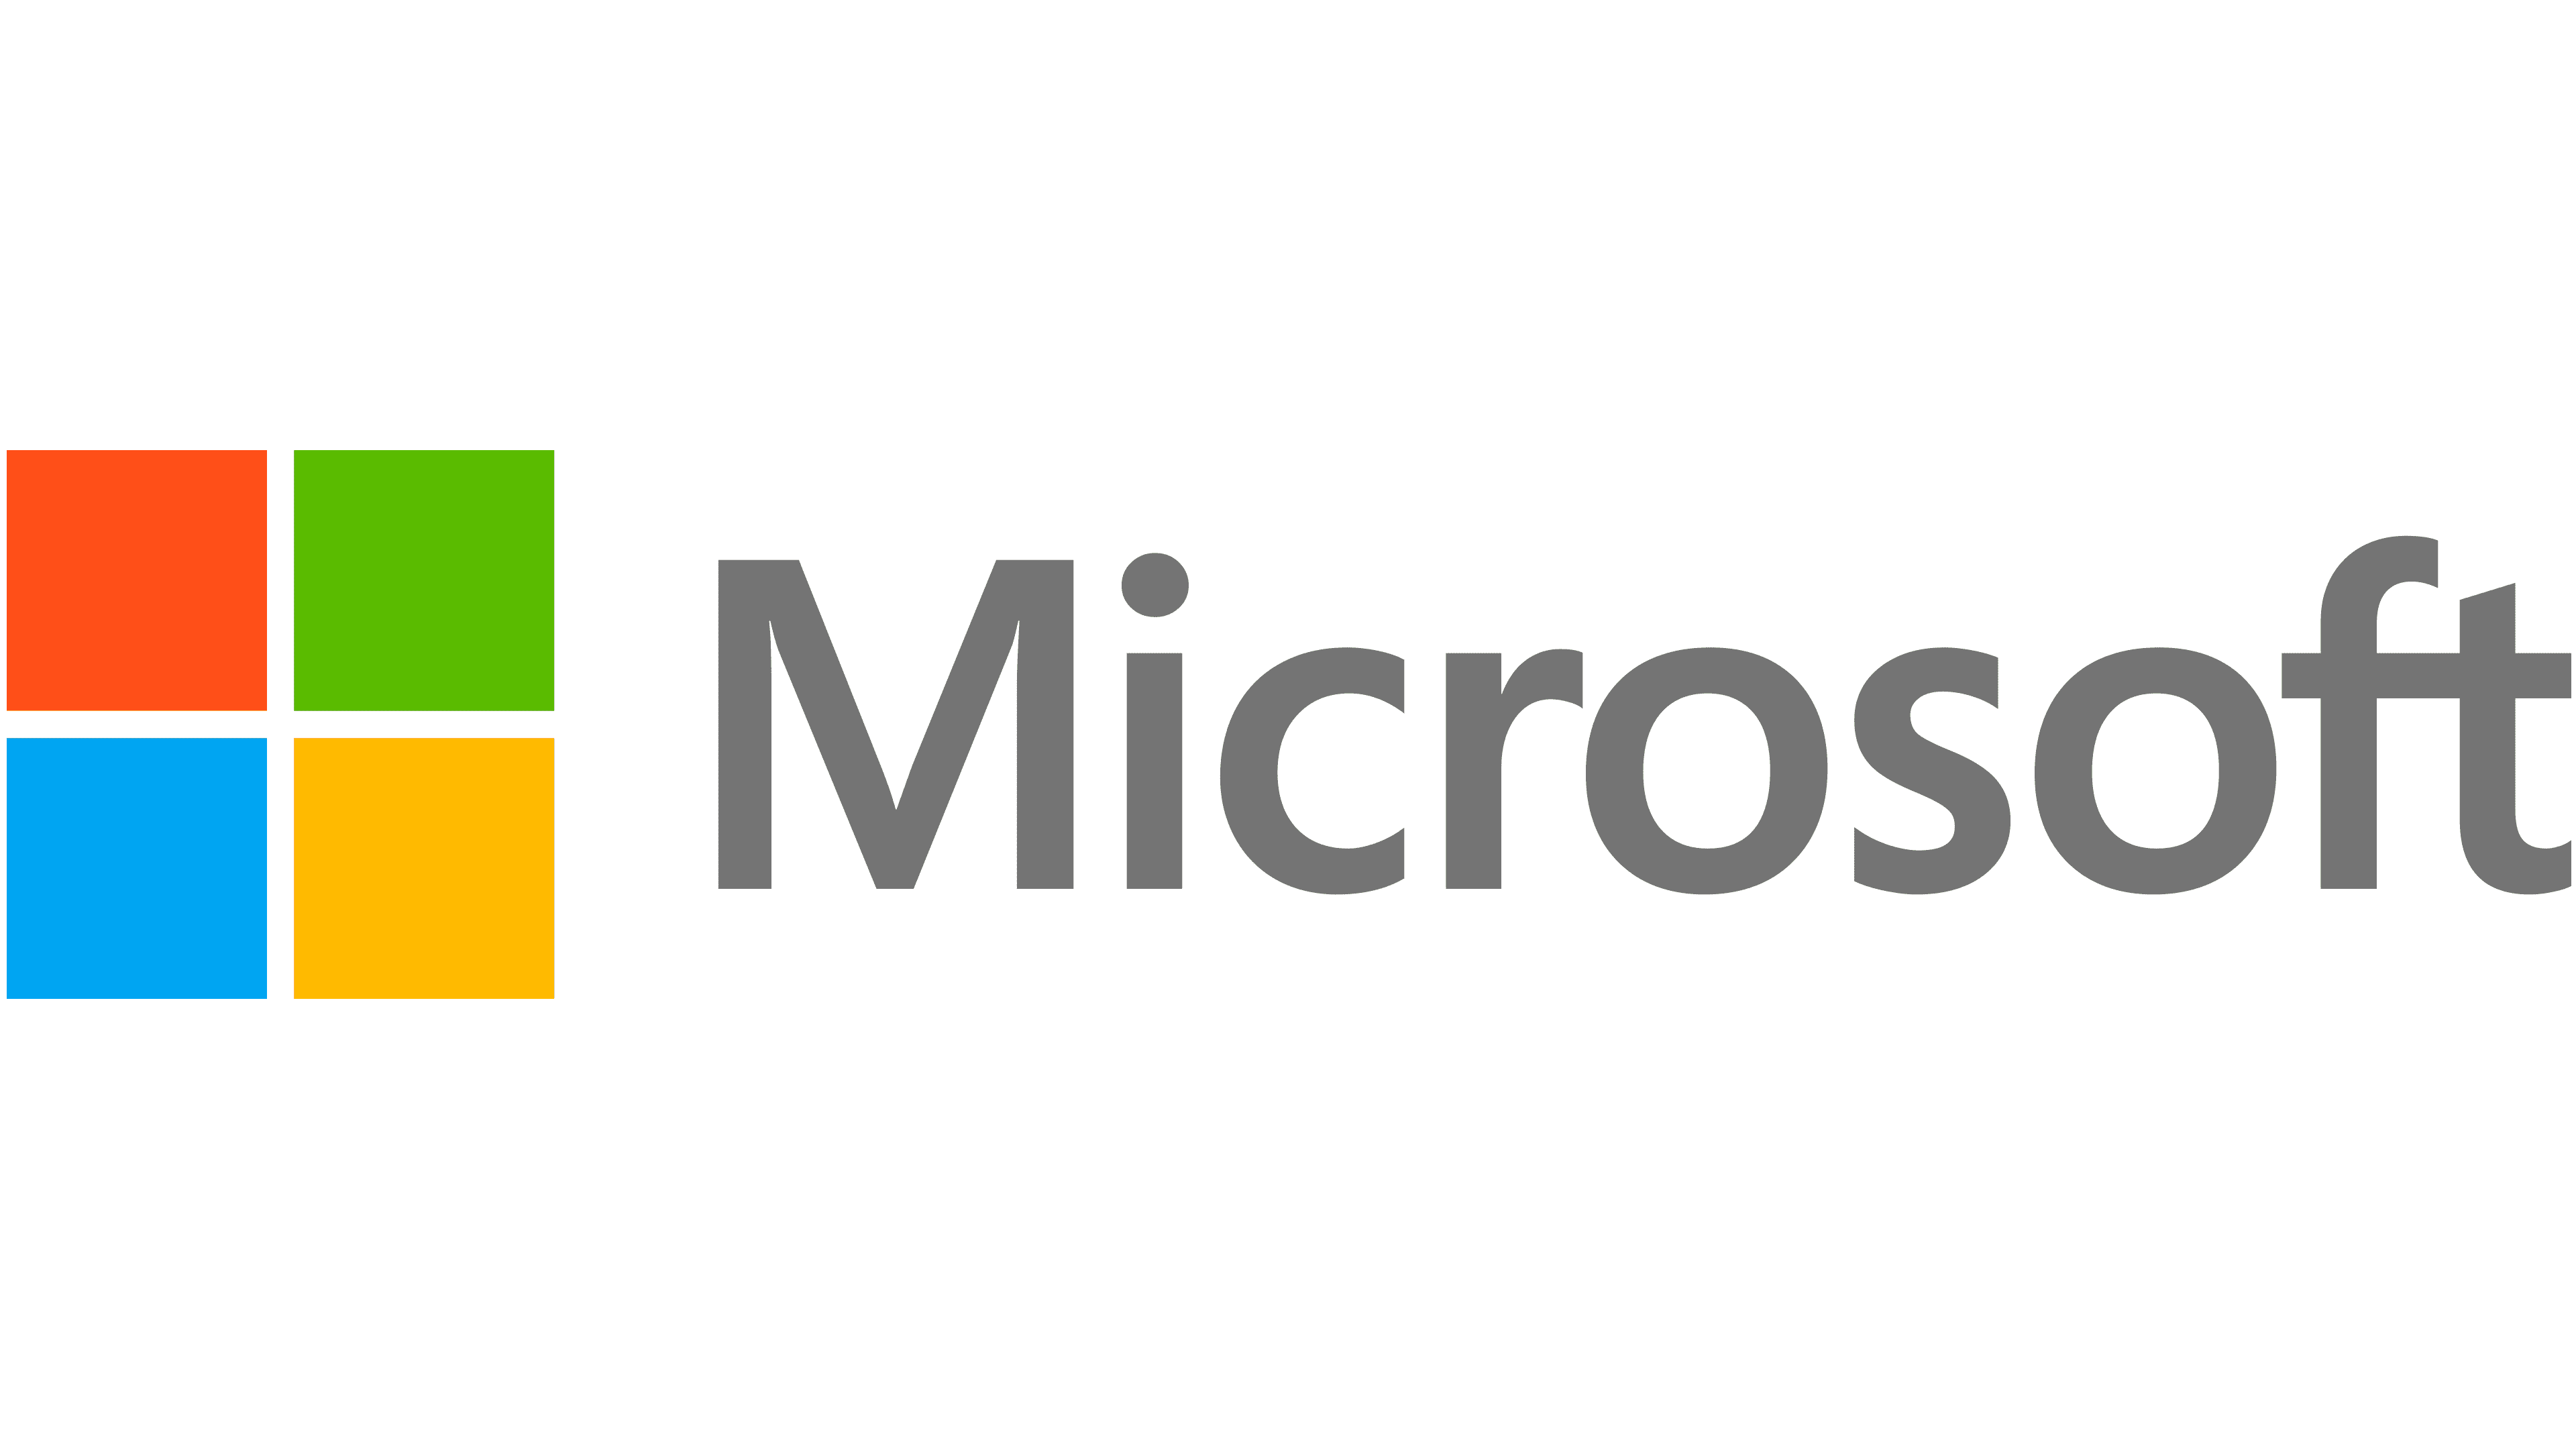 Microsoft jobs logo